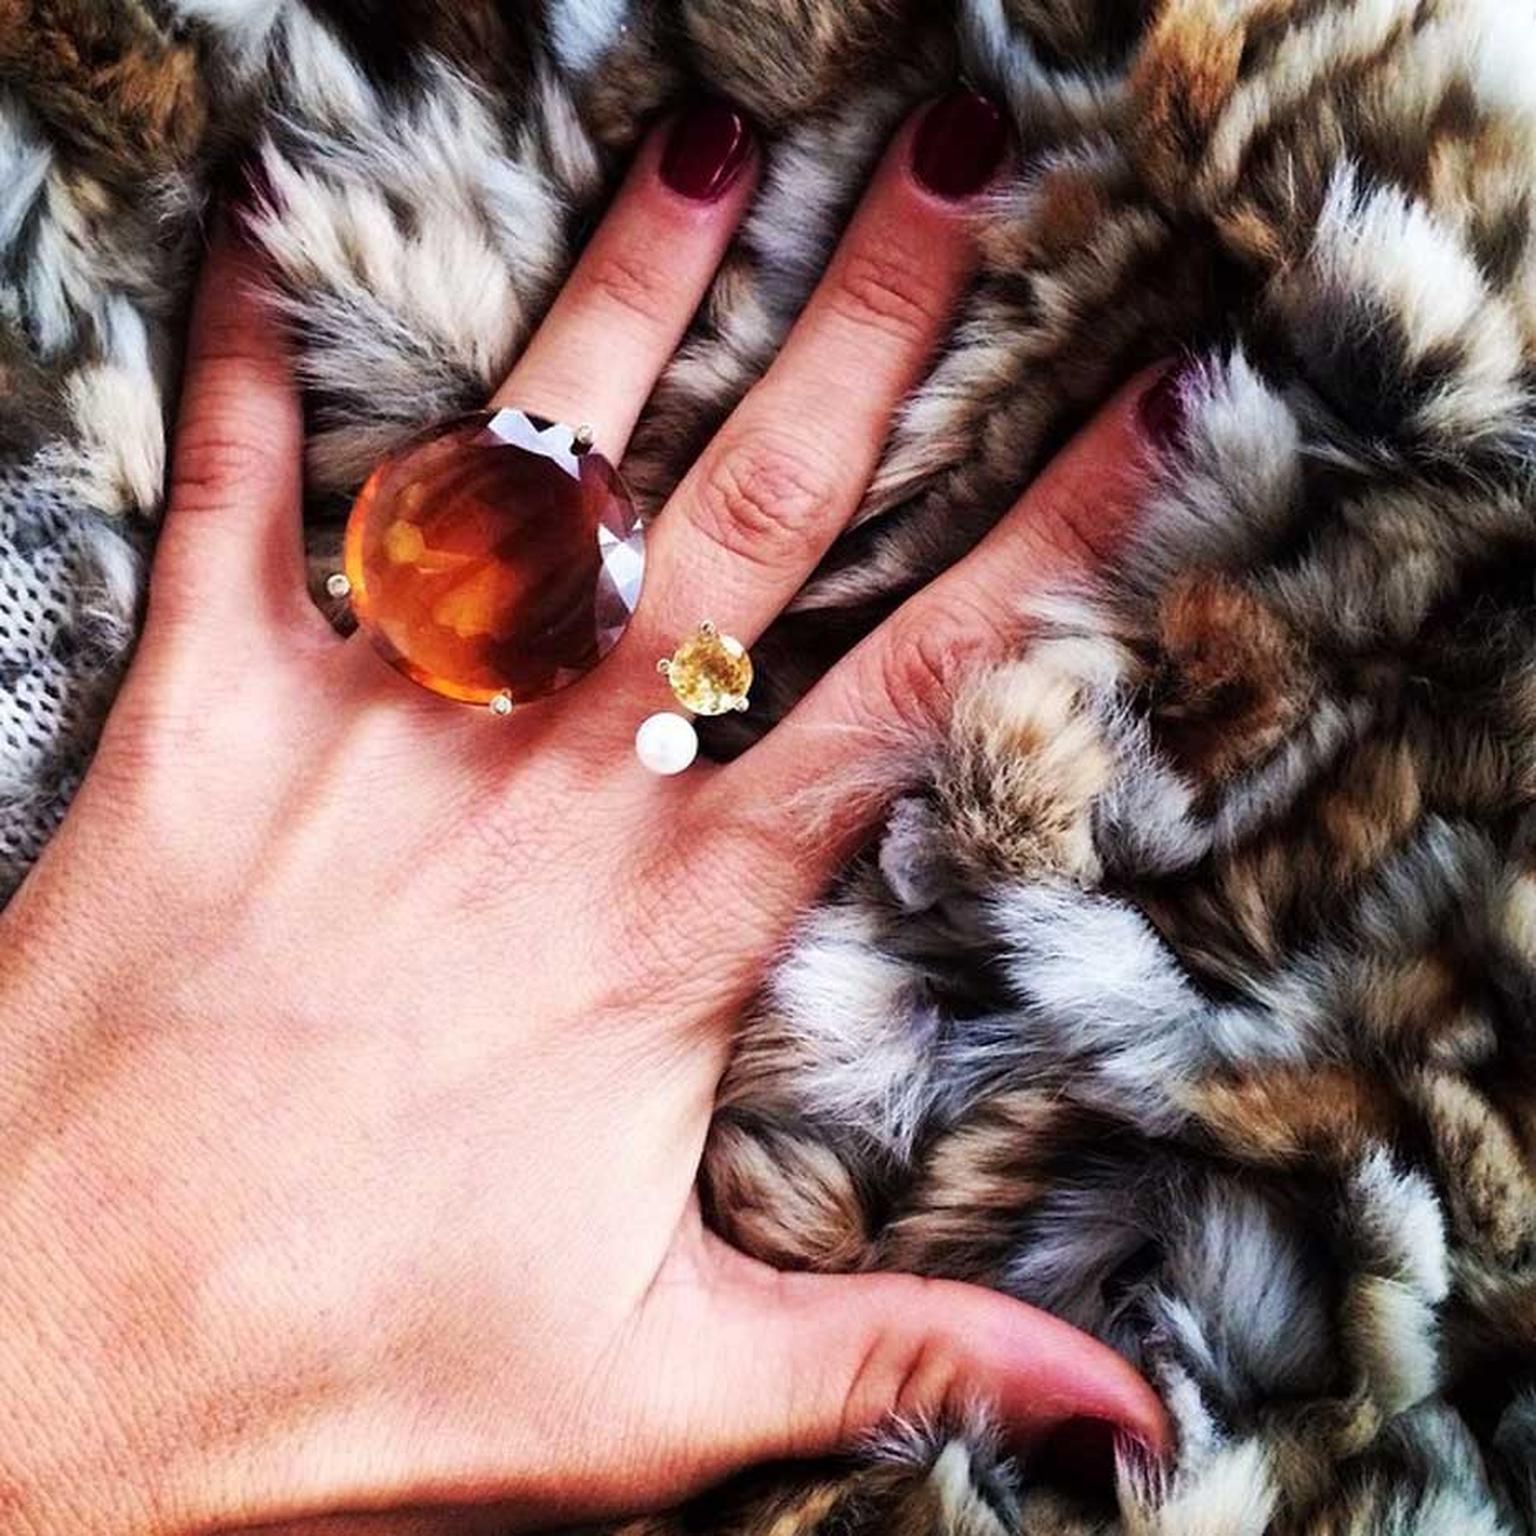 Italian jewellery designer Delfina Delettrez regularly shares snaps of her unique and colourful jewellery on Instagram. Image: @delfinadelettrez Instagram